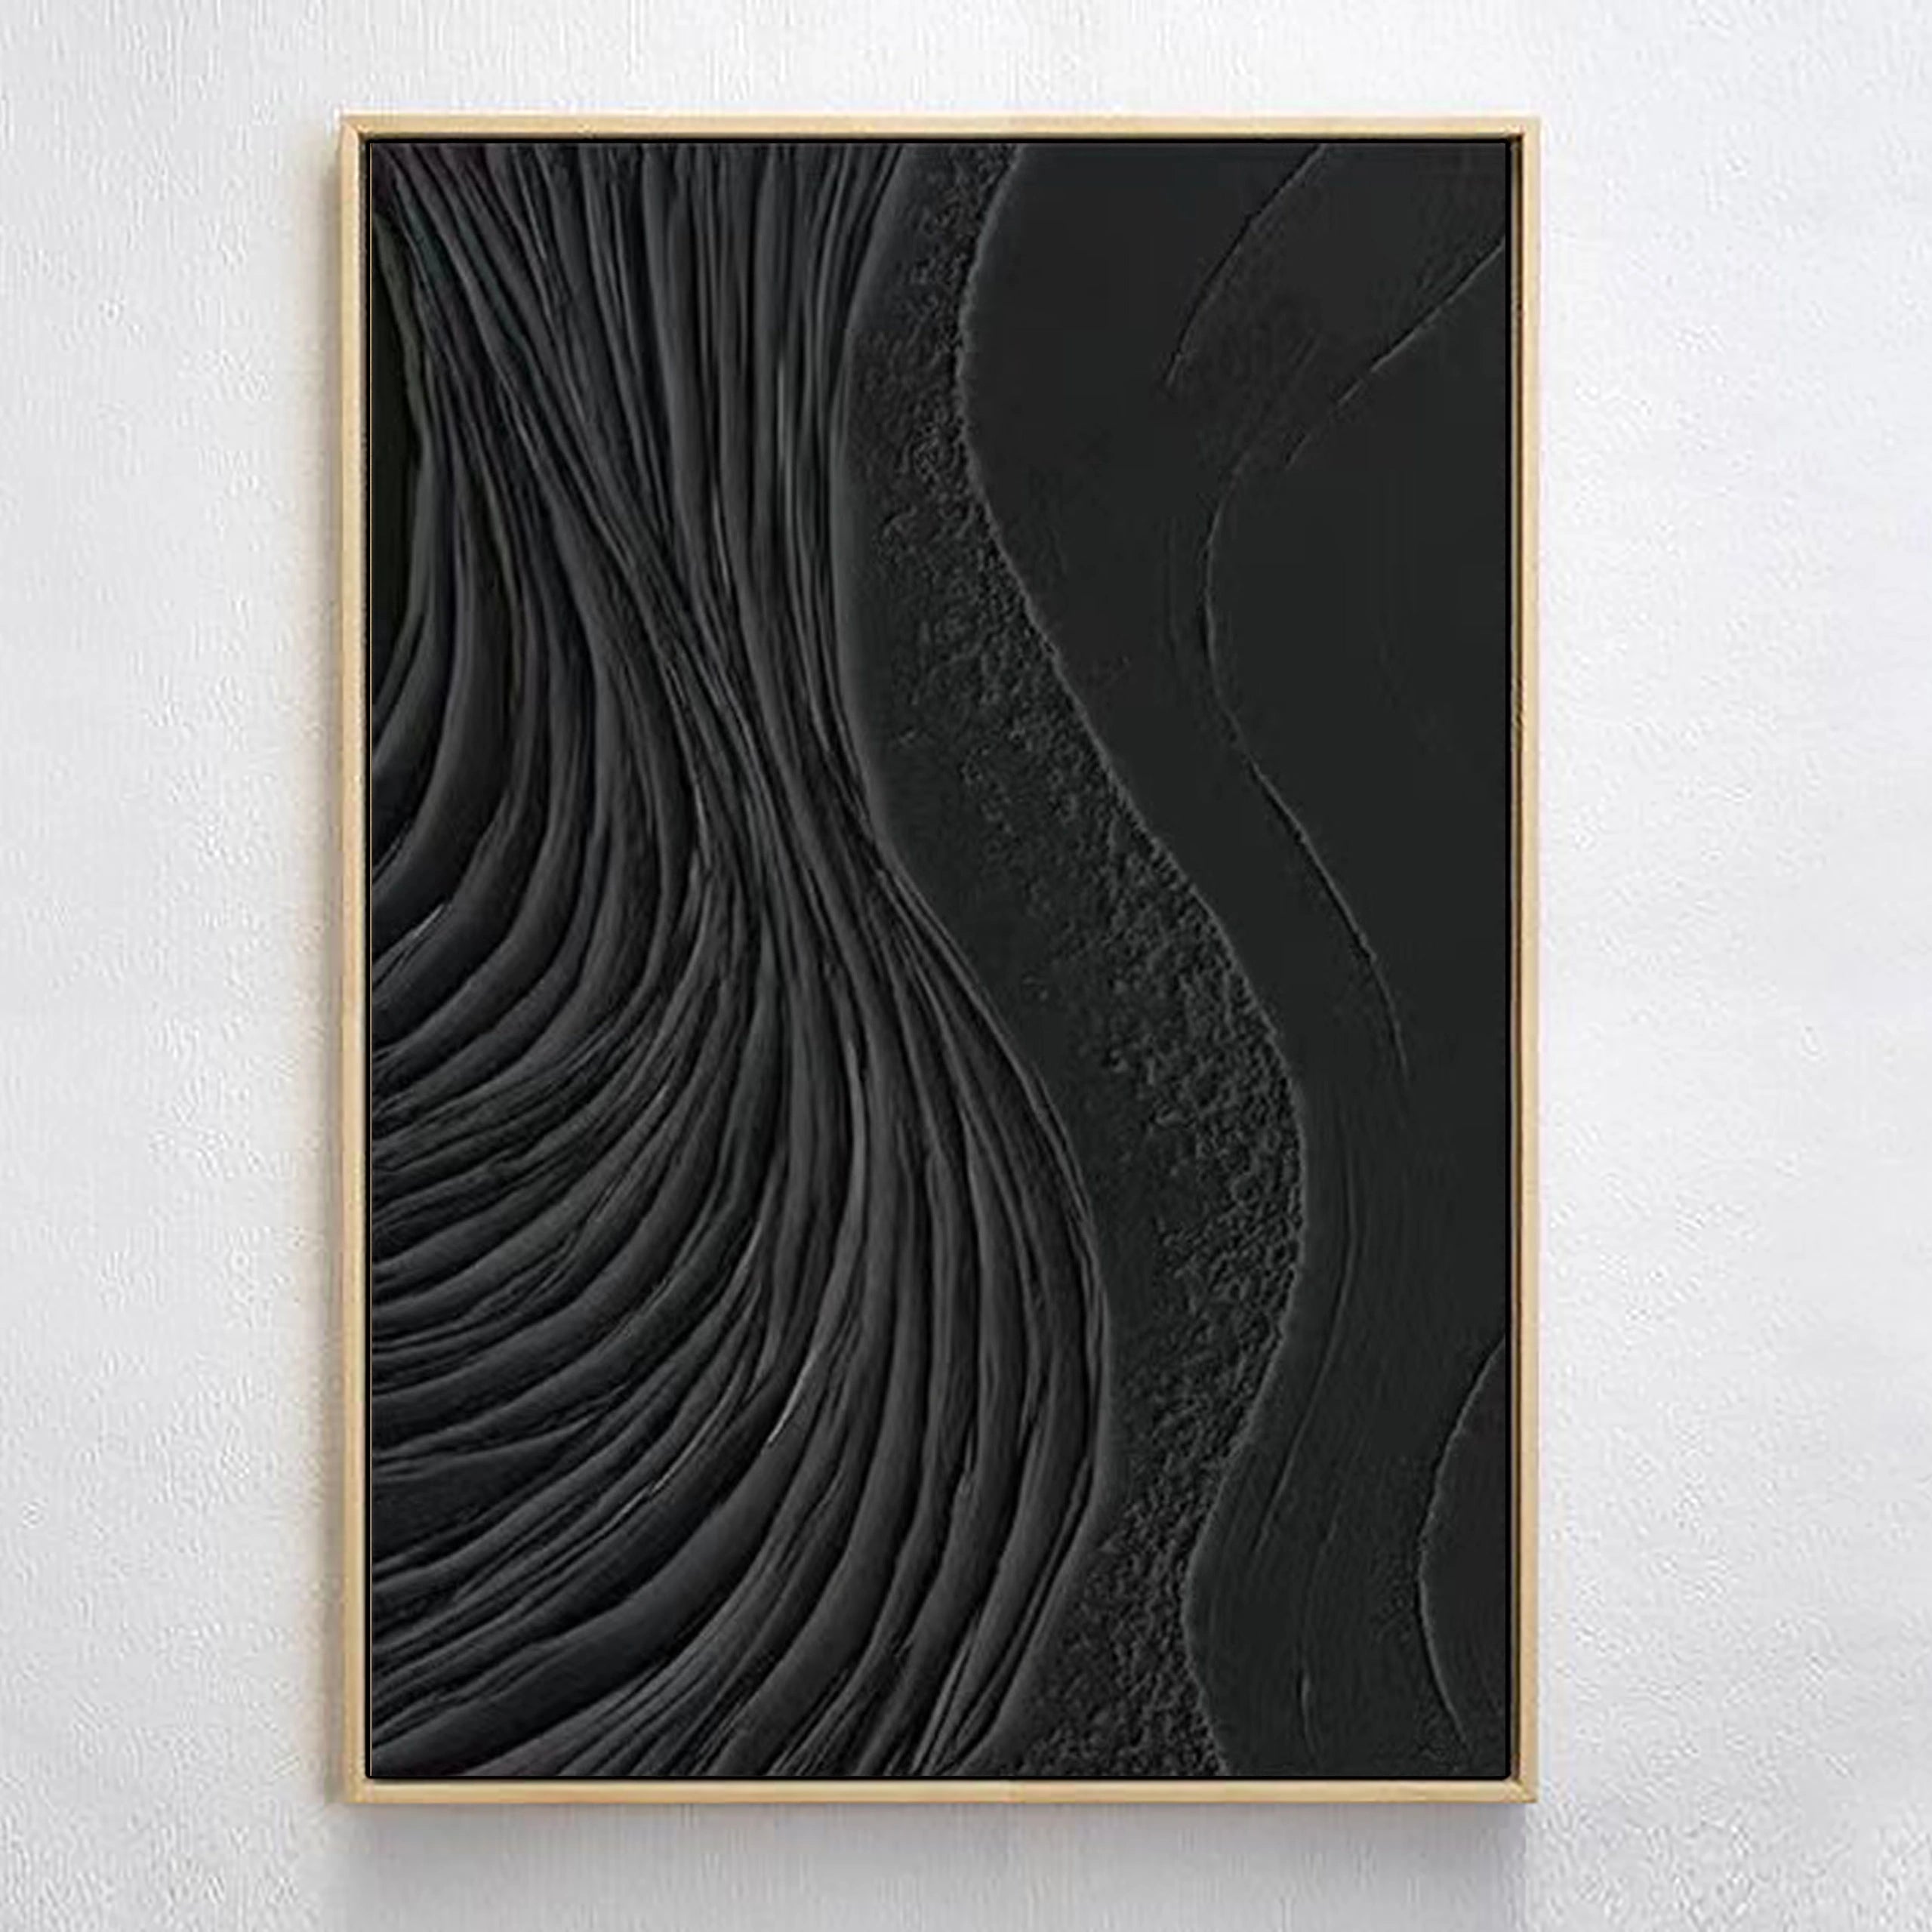 3D Textured Black Surf Minimalist Painting Modernism Wall Art For Living Room/Bedroom